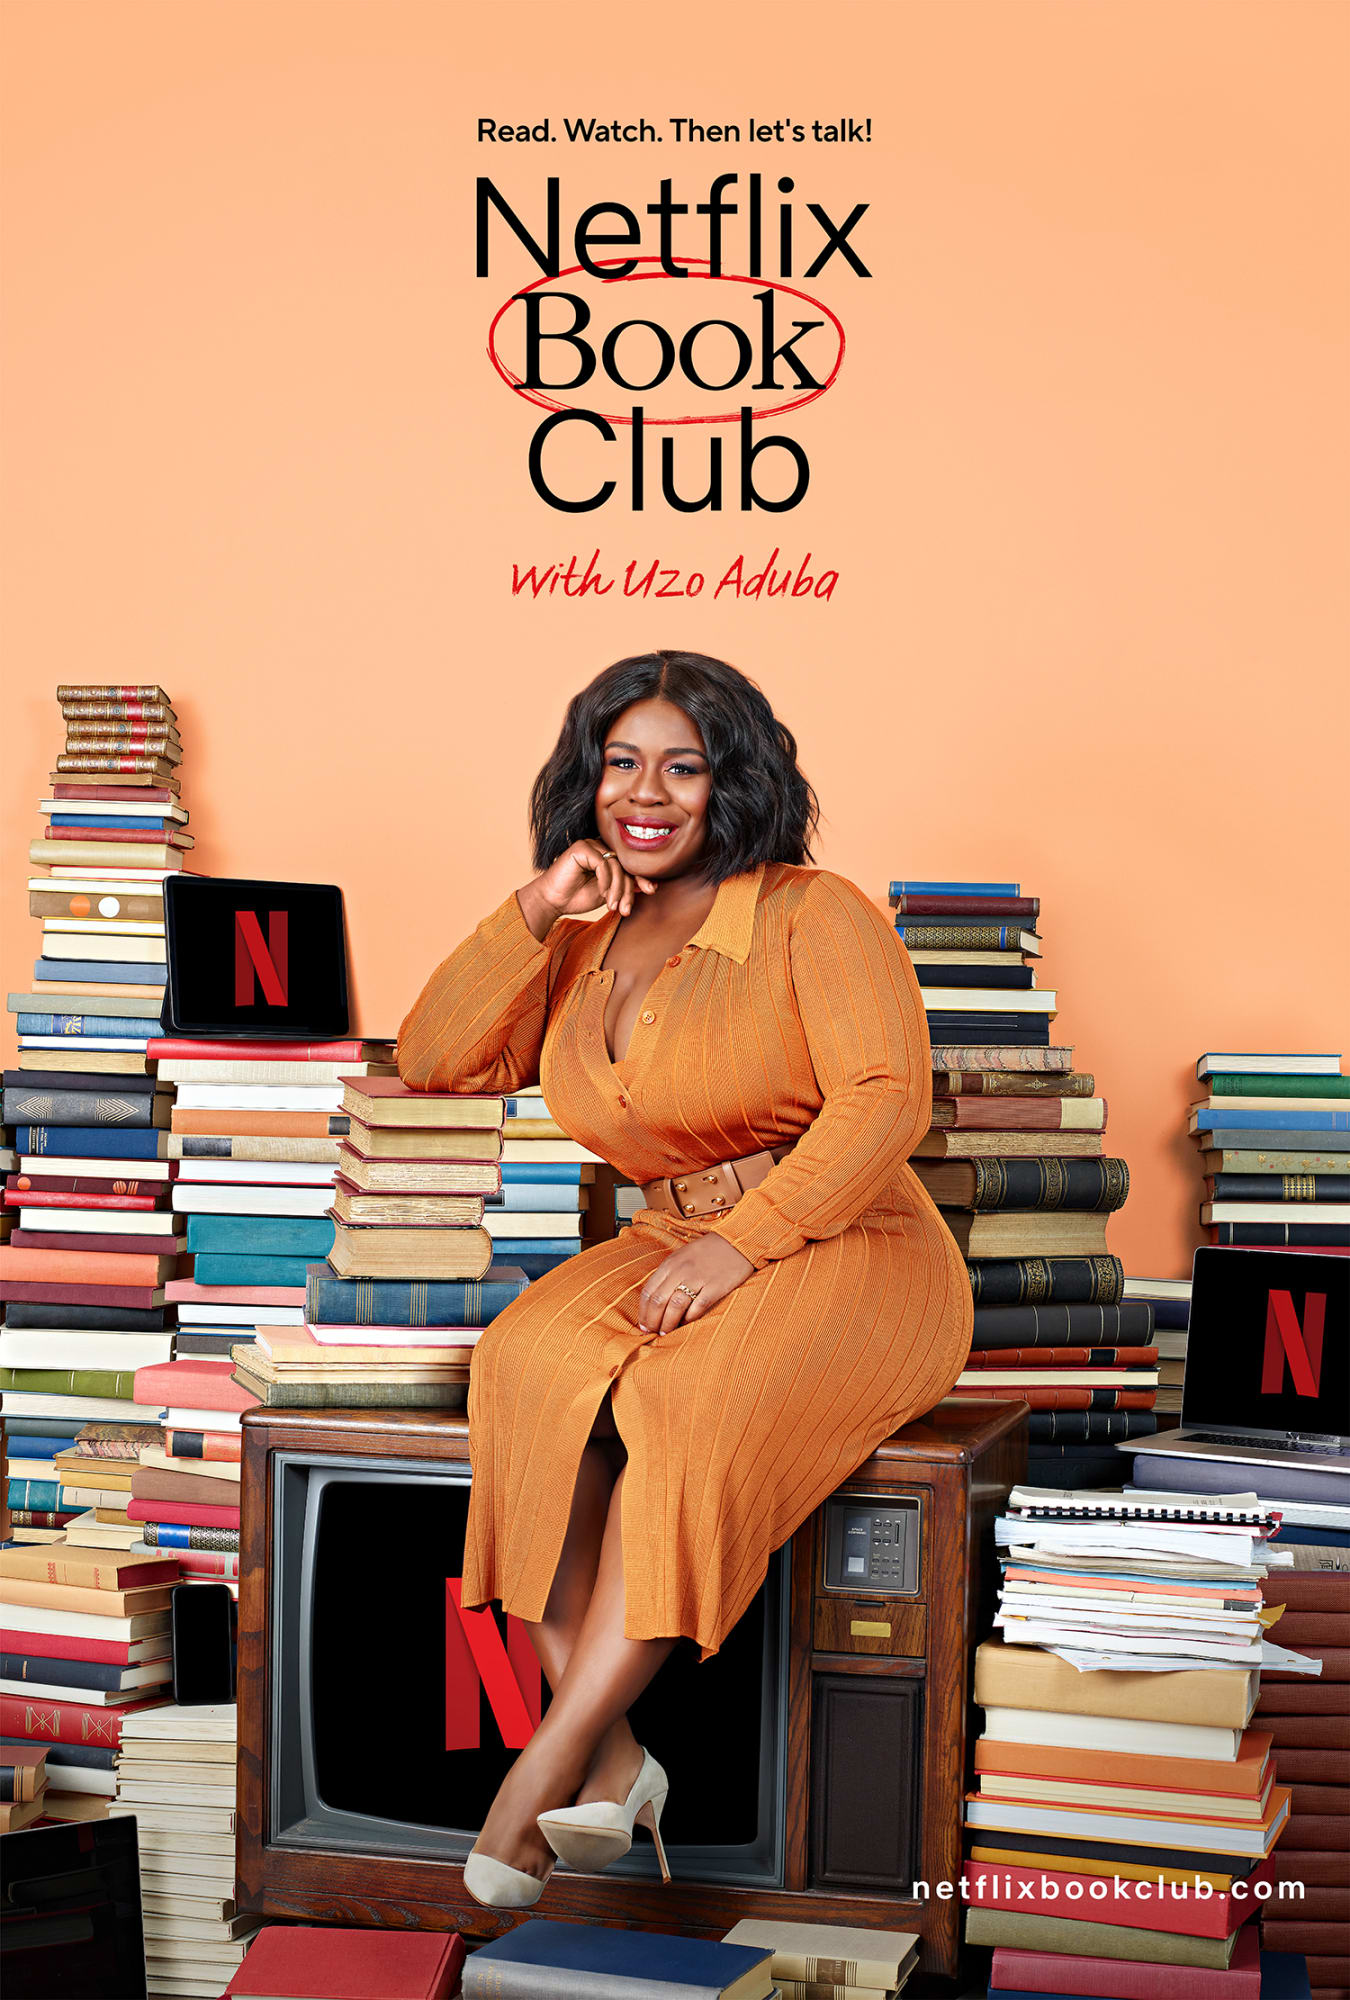 link to Netflix book club website